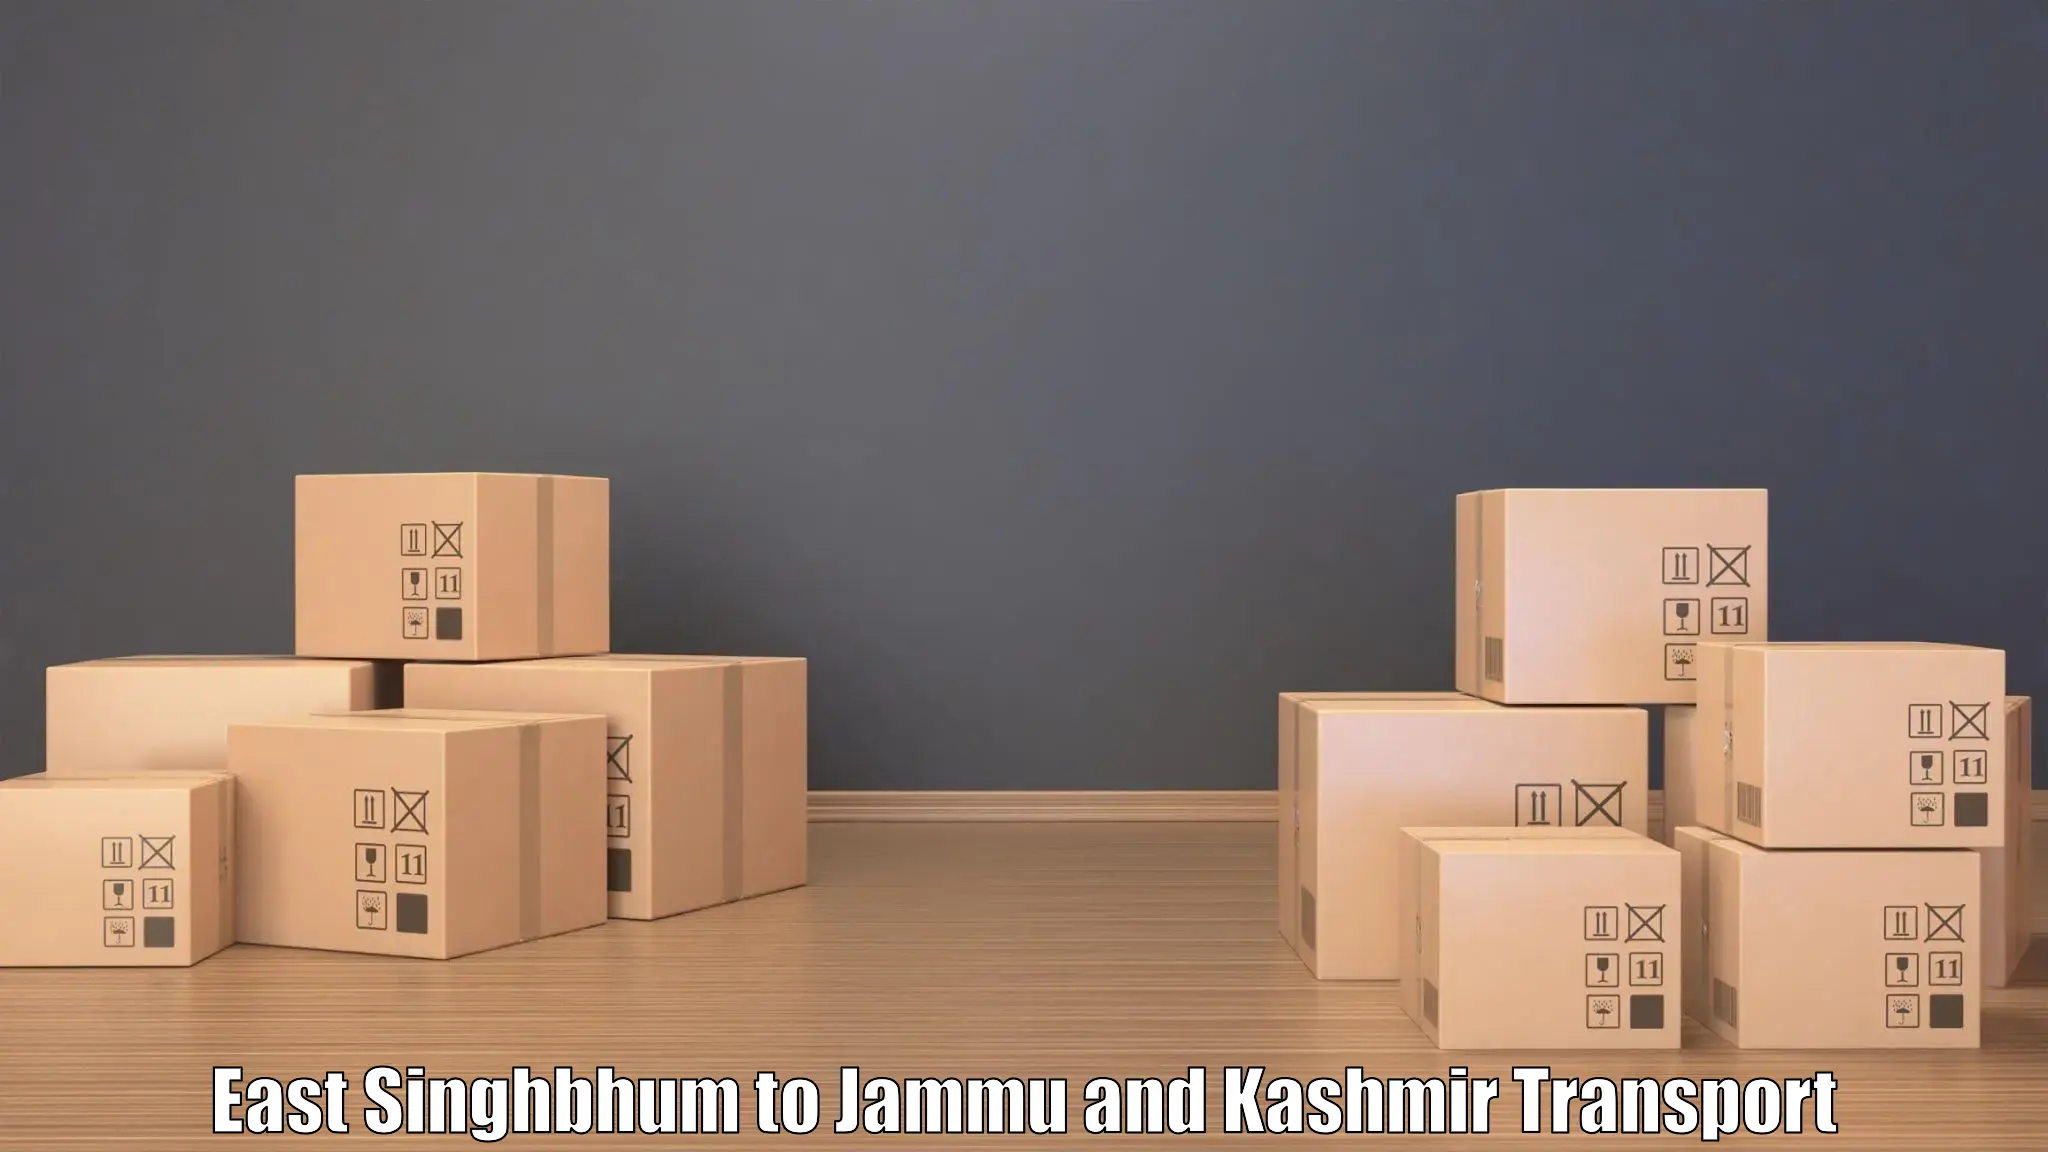 Shipping partner East Singhbhum to Bhaderwah